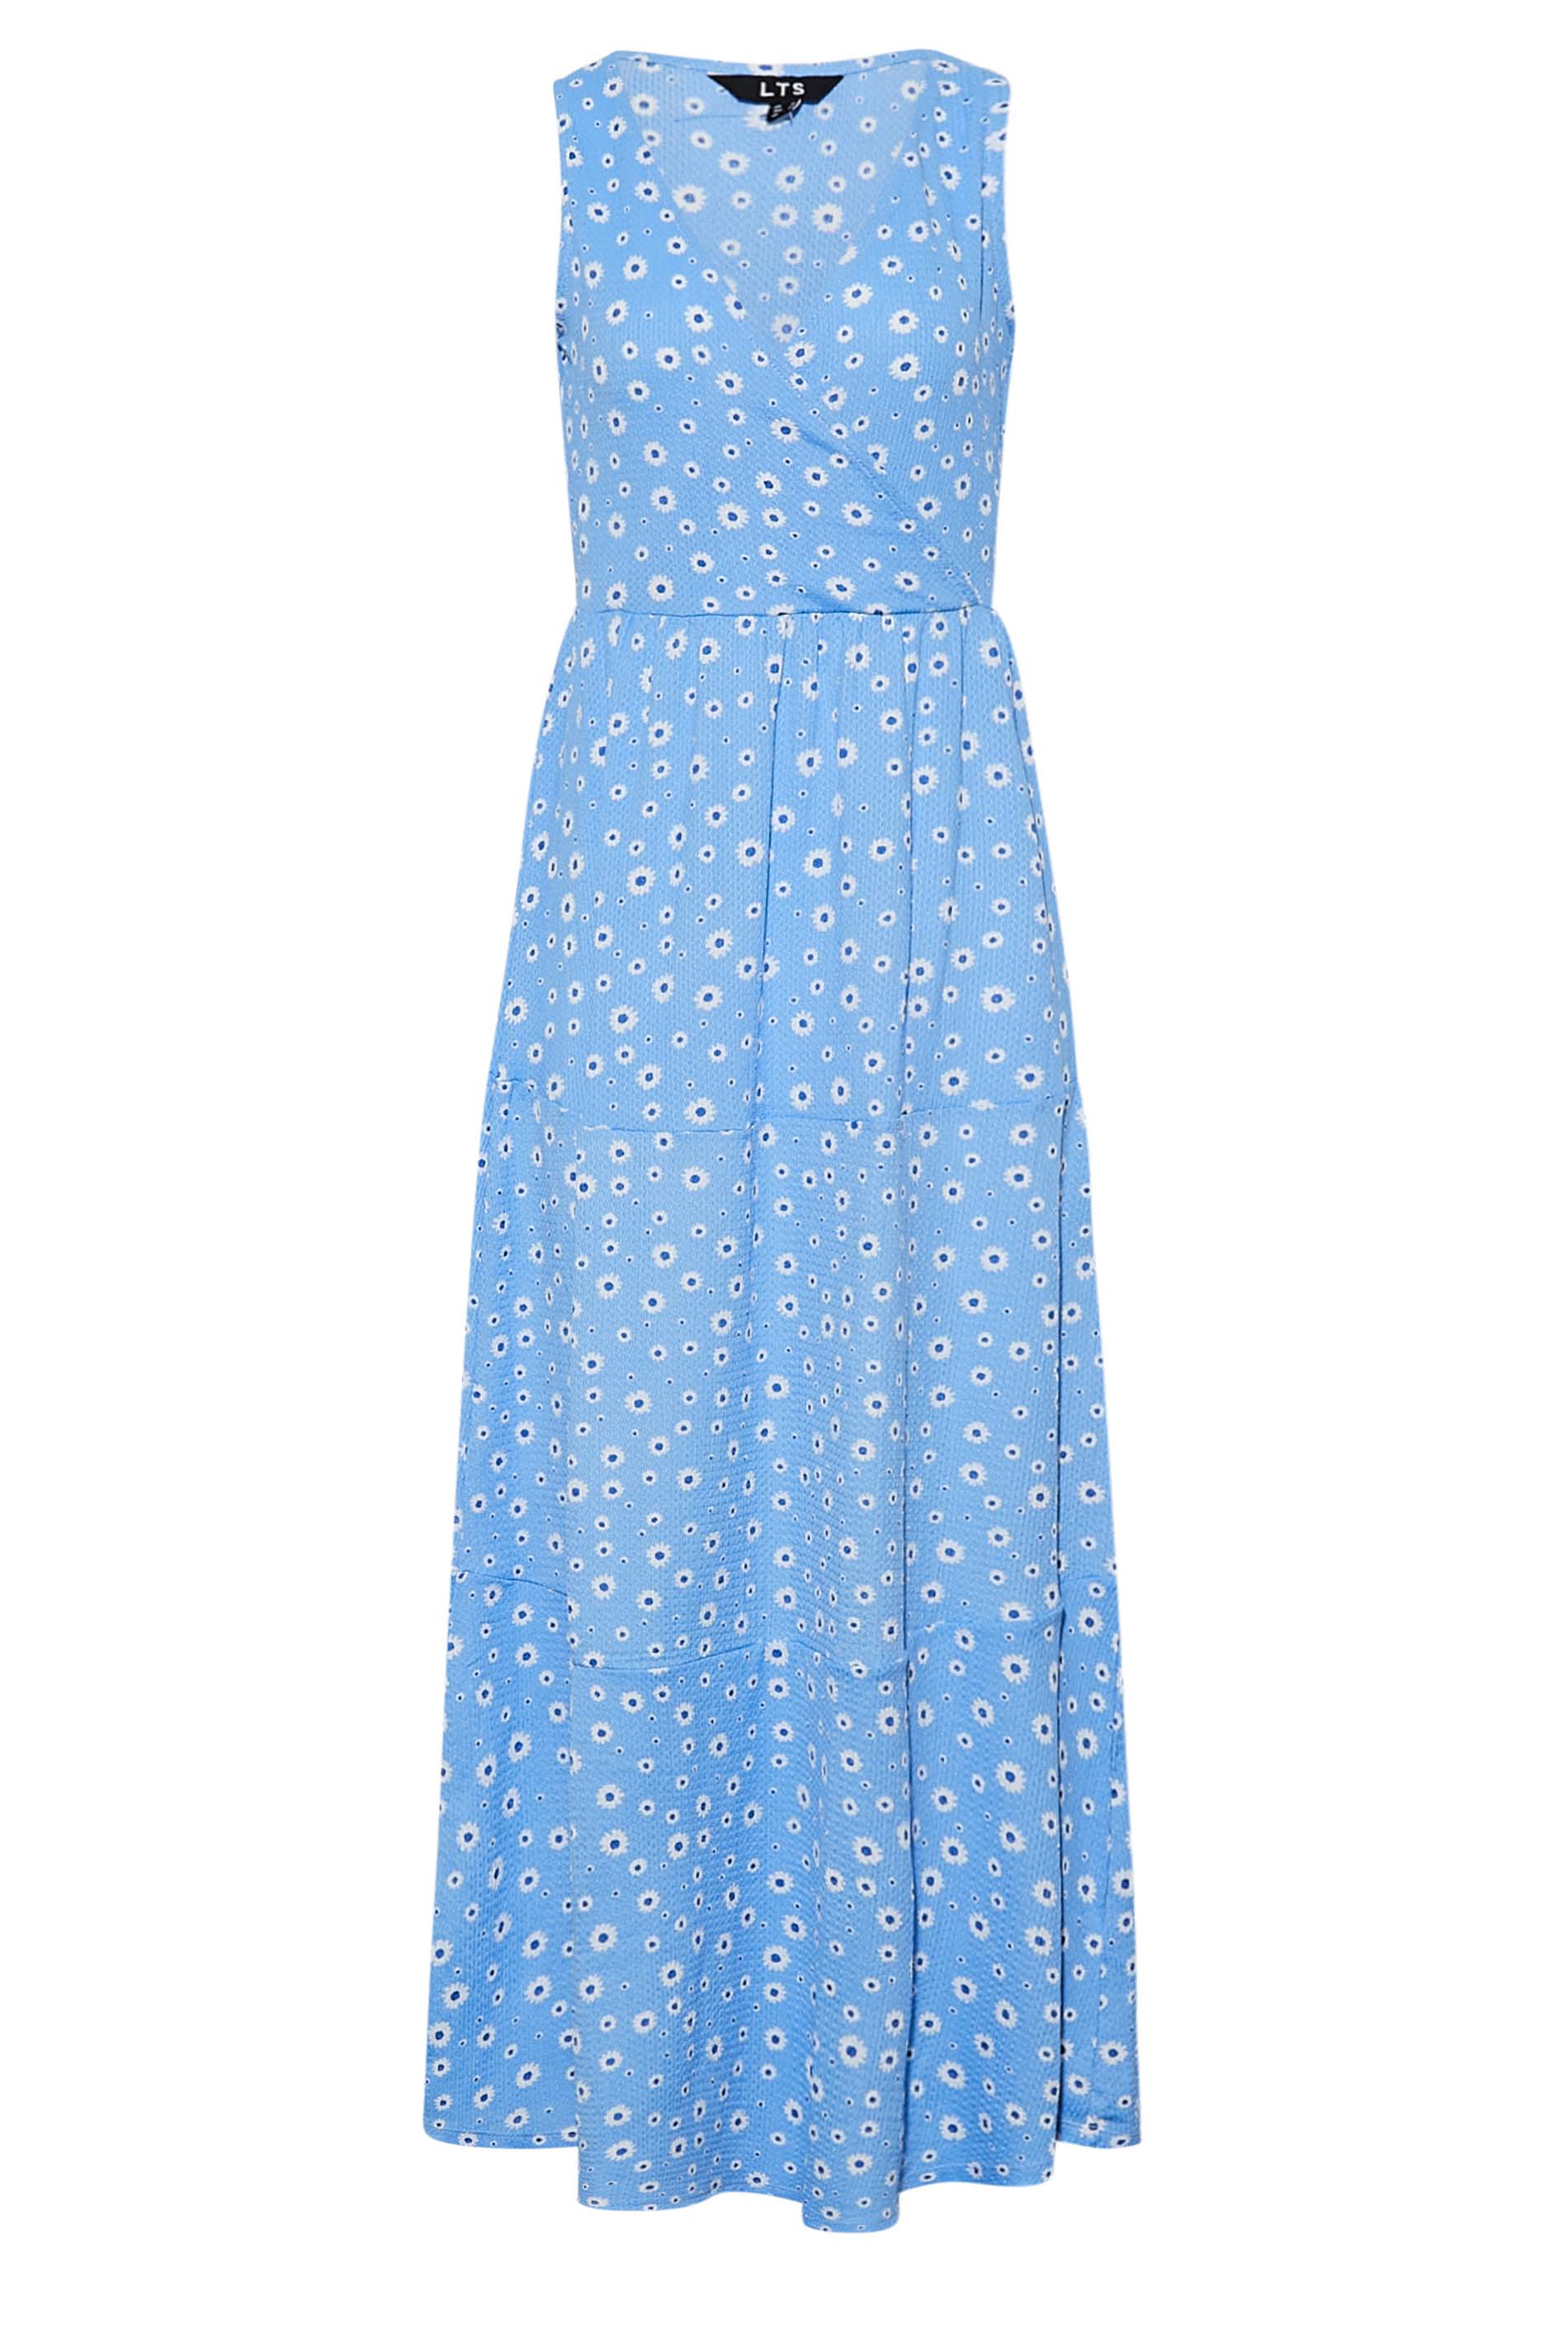 LTS Tall Women's Blue Daisy Print Maxi Dress | Long Tall Sally 2